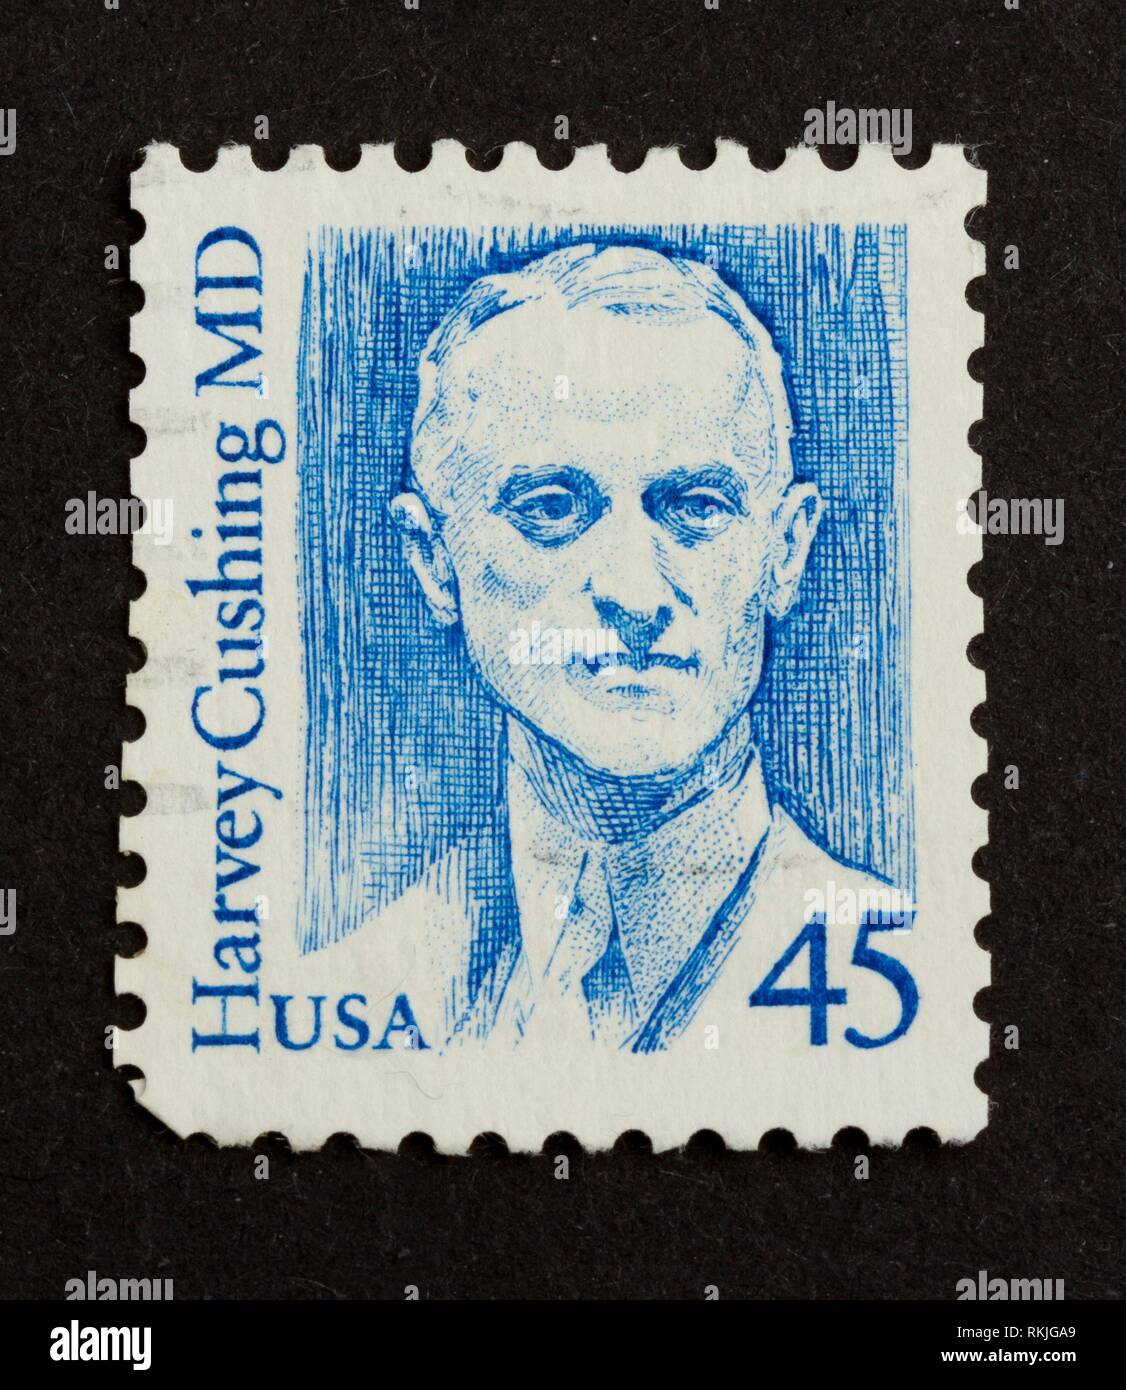 USA - CIRCA 1985: Stamp printed in the USA shows Harvey Cushing, circa 1975. Stock Photo